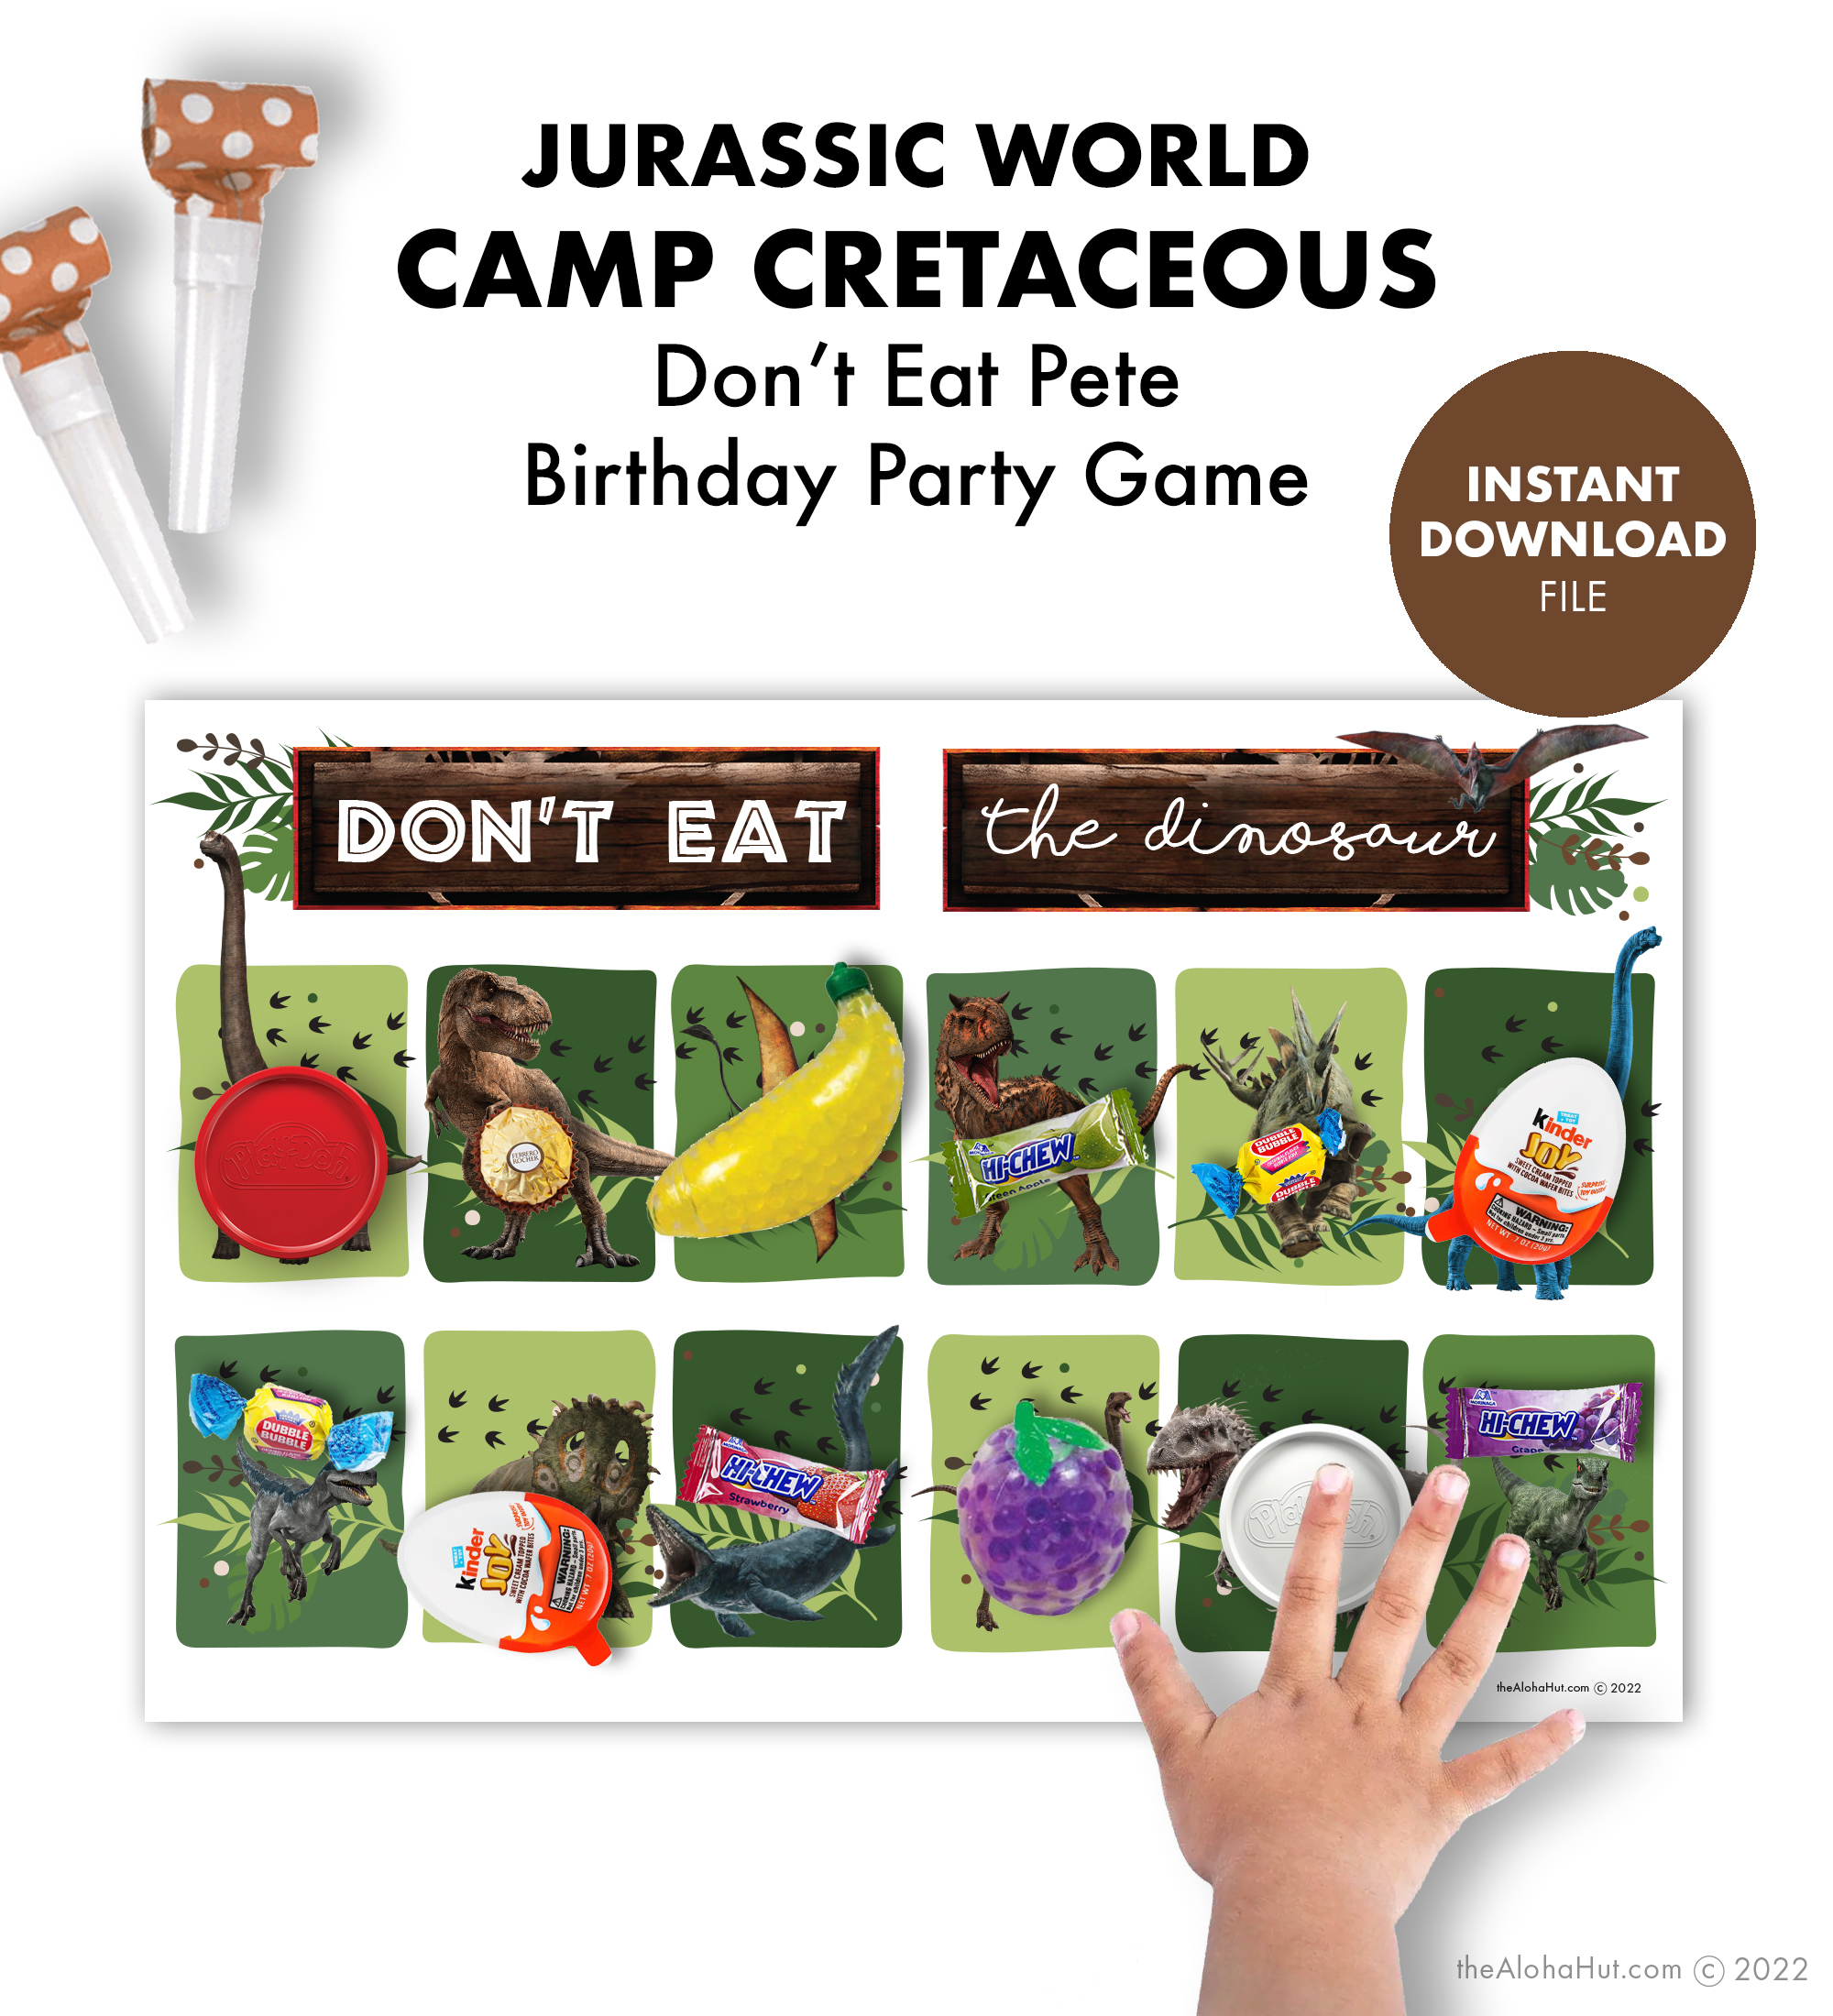 Jurassic World Camp Cretaceous Don't Eat Pete Party Game